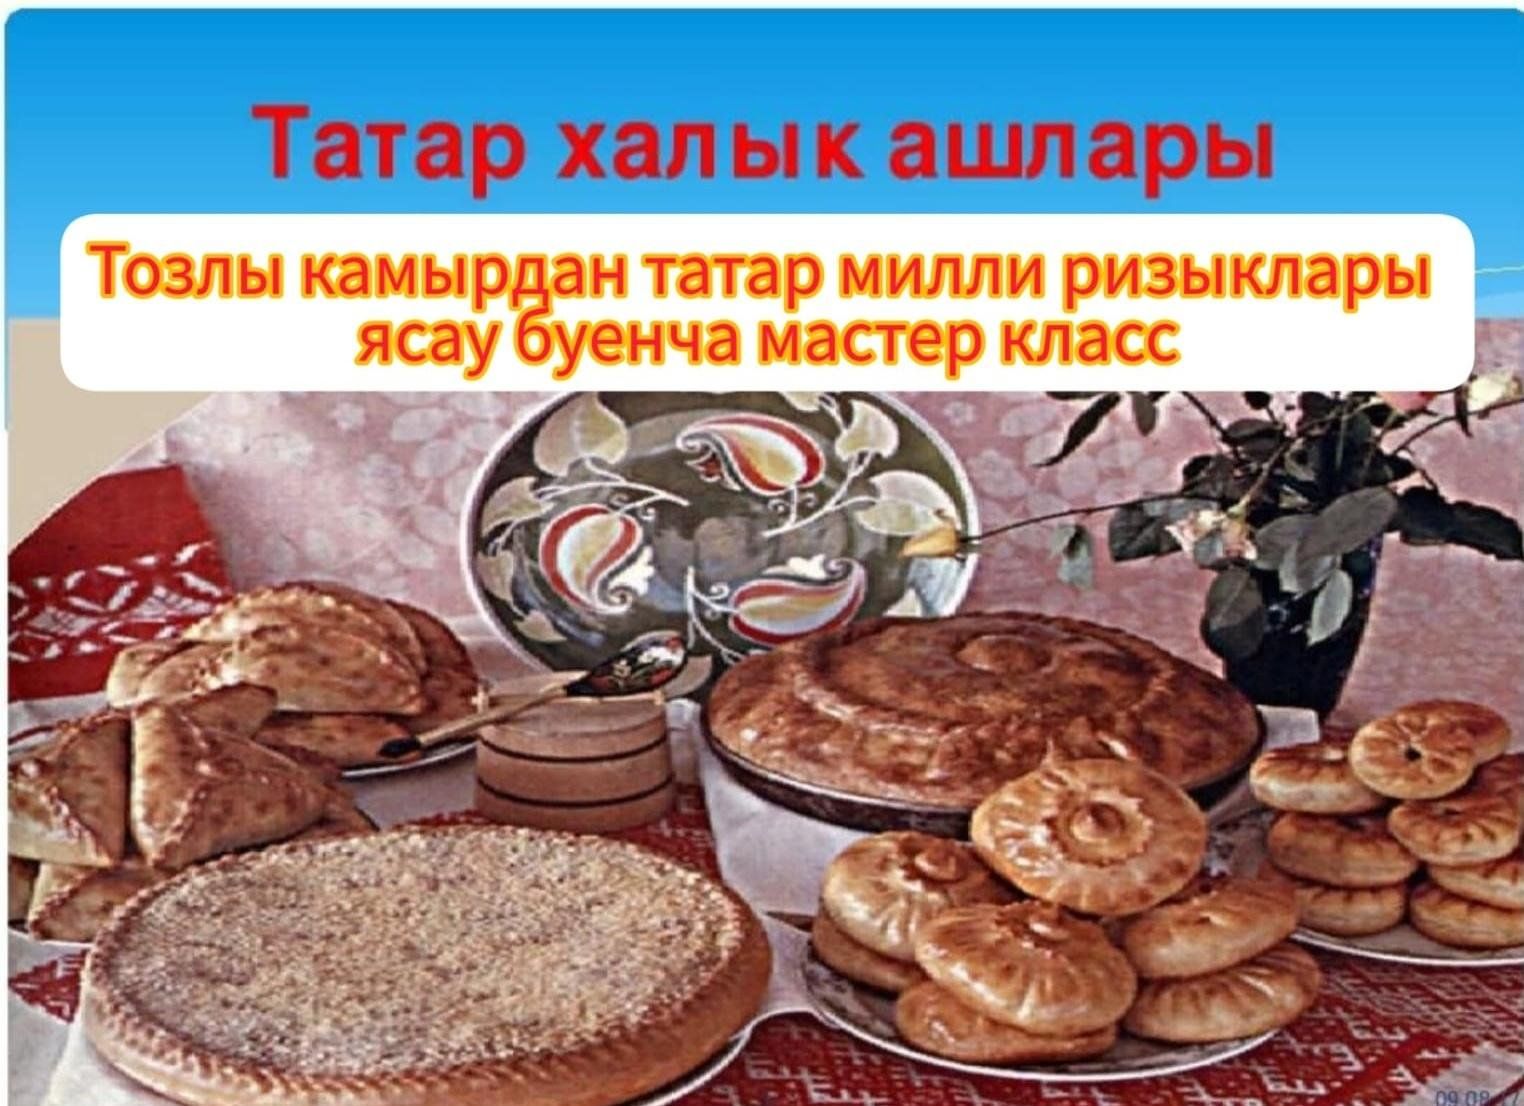 Татарские национальные блюда татар халык ашлары